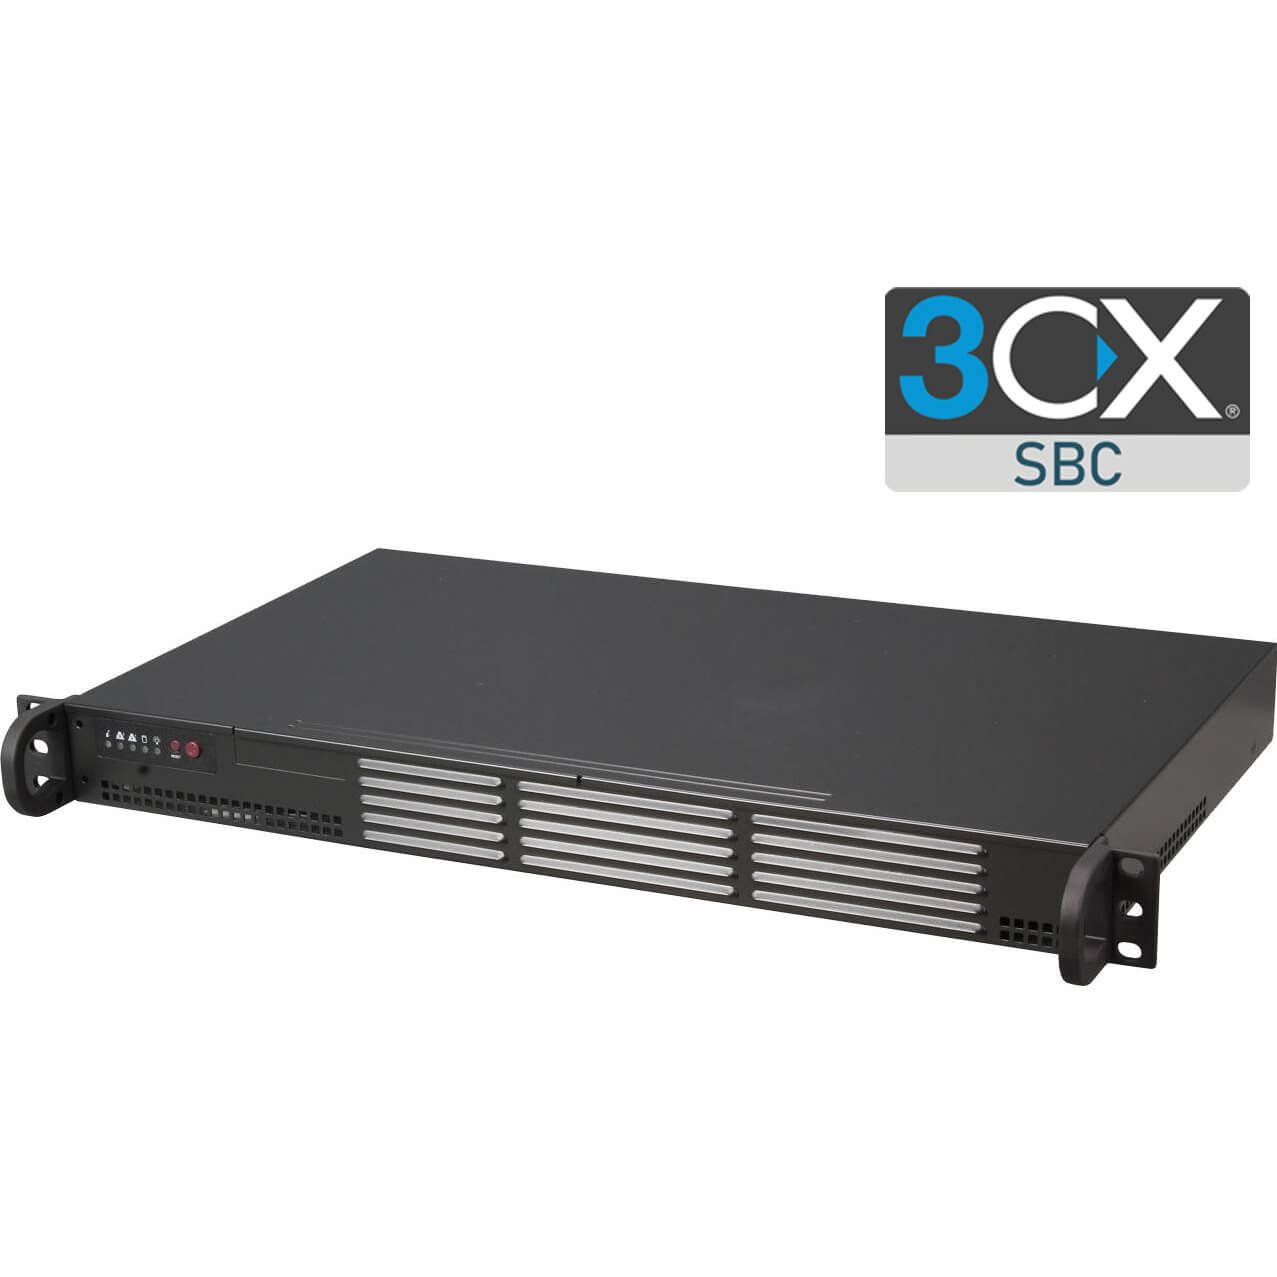   Serveur IPBX   SBC 3CX 19 pré-installé jusqu'à 30 devices CX-SERVR-SBC